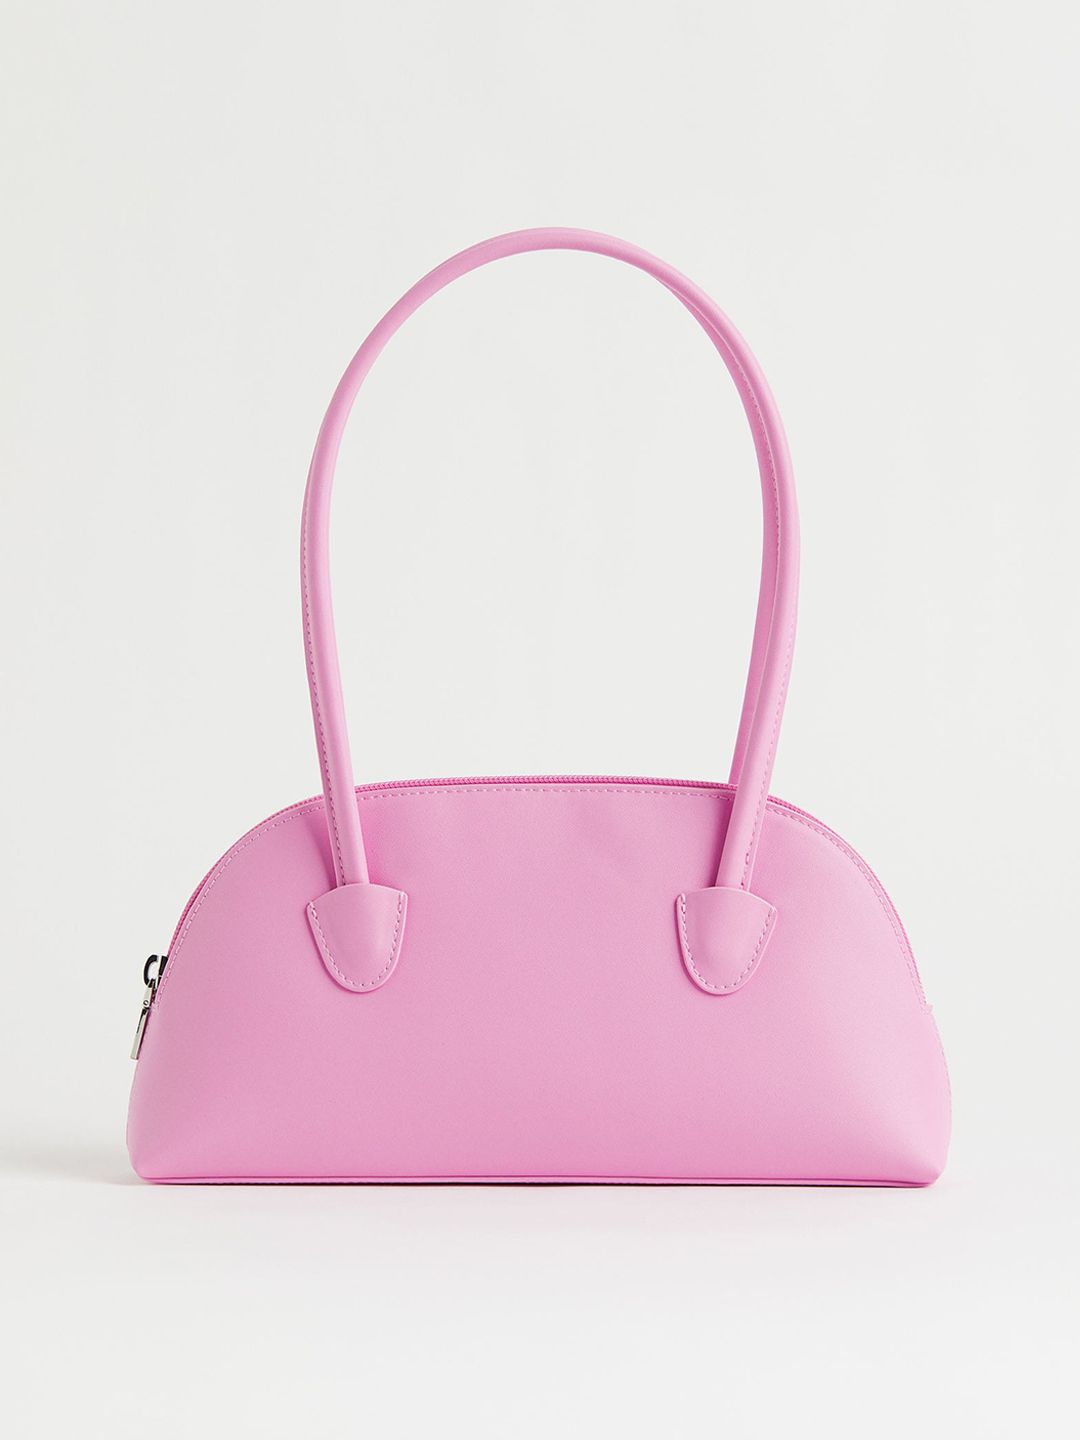 H&M Women Pink Bowling Bag Price in India